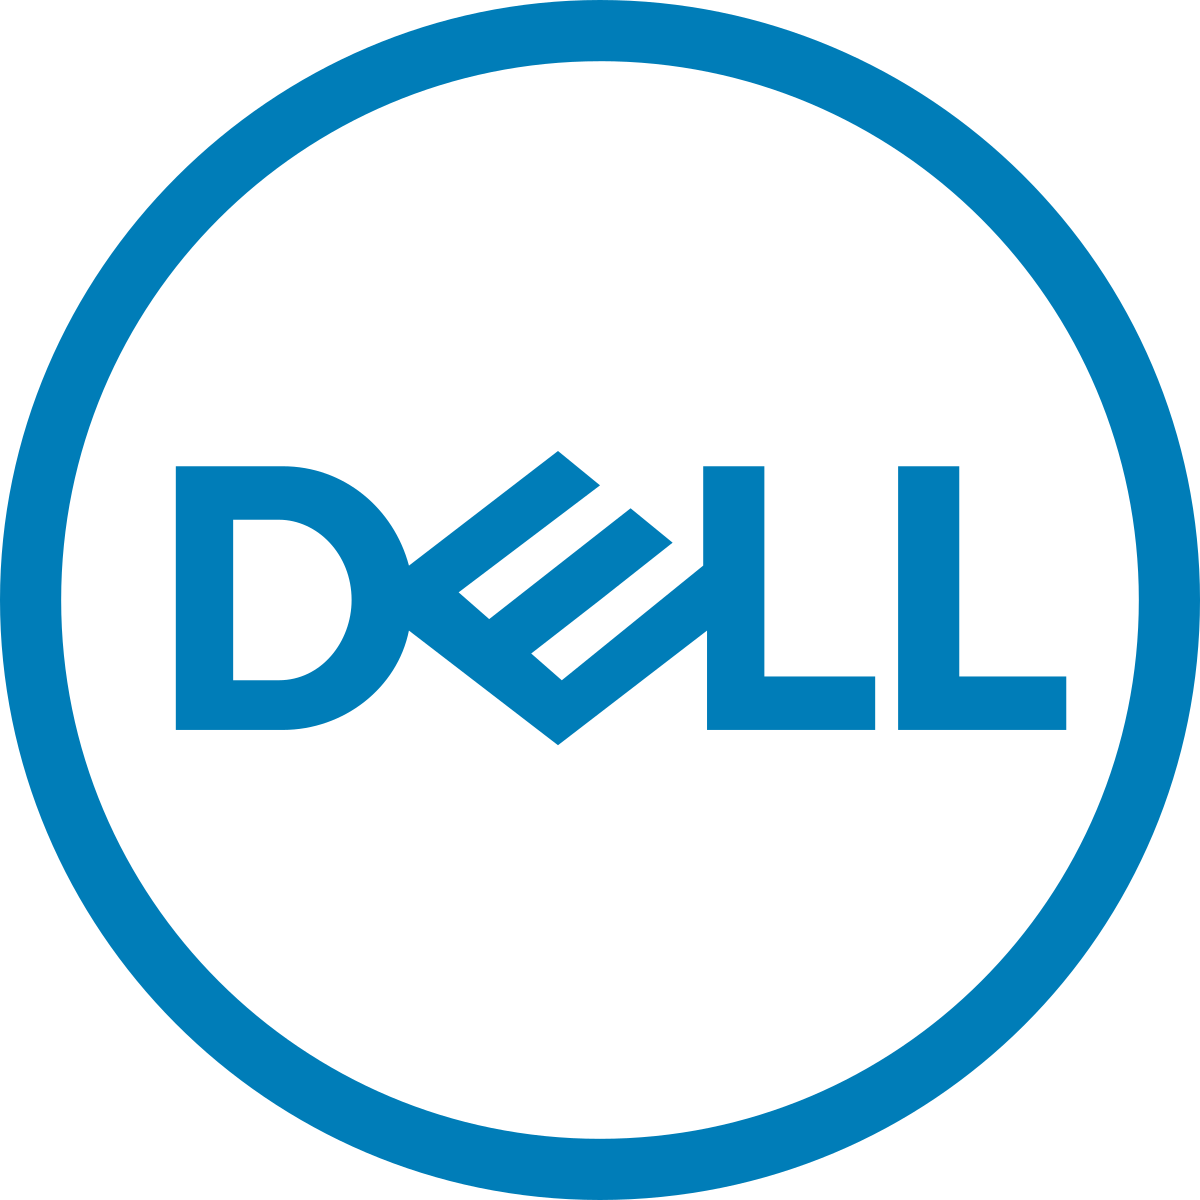 Dell logo with Windows 7 logo